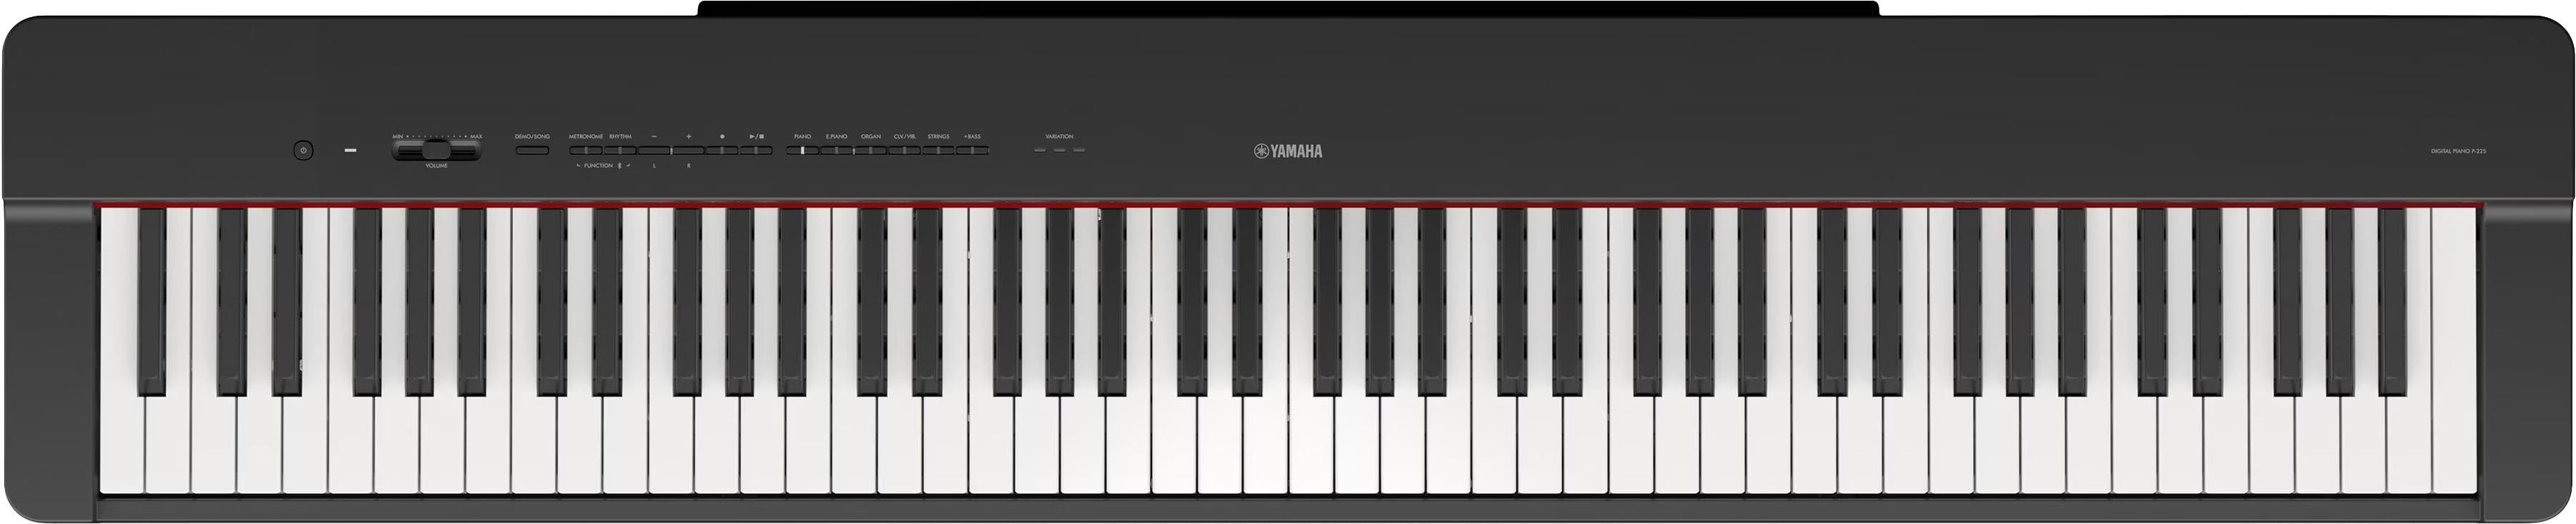 Yamaha P225 Digital Piano